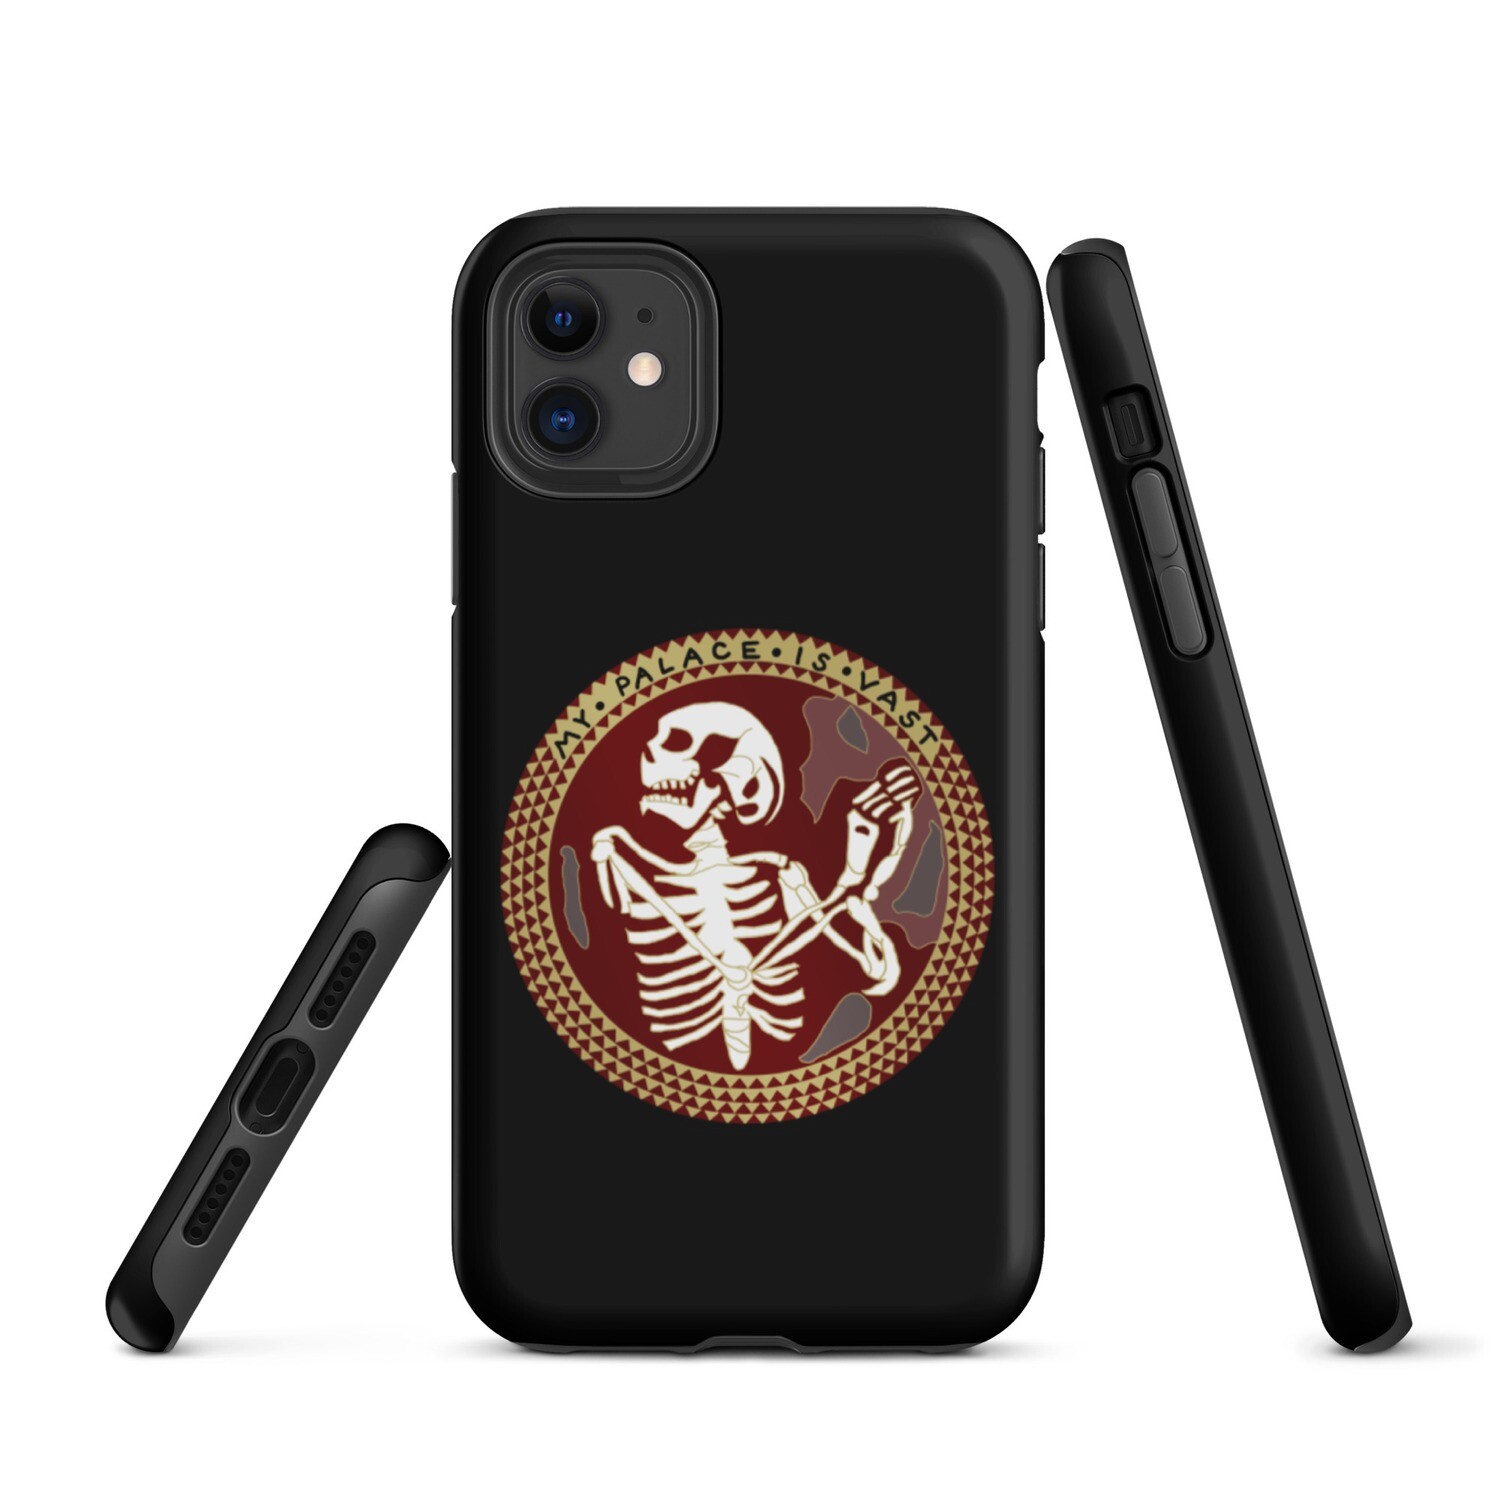 Norman Chapel Hannibal Skeleton Tough iPhone case